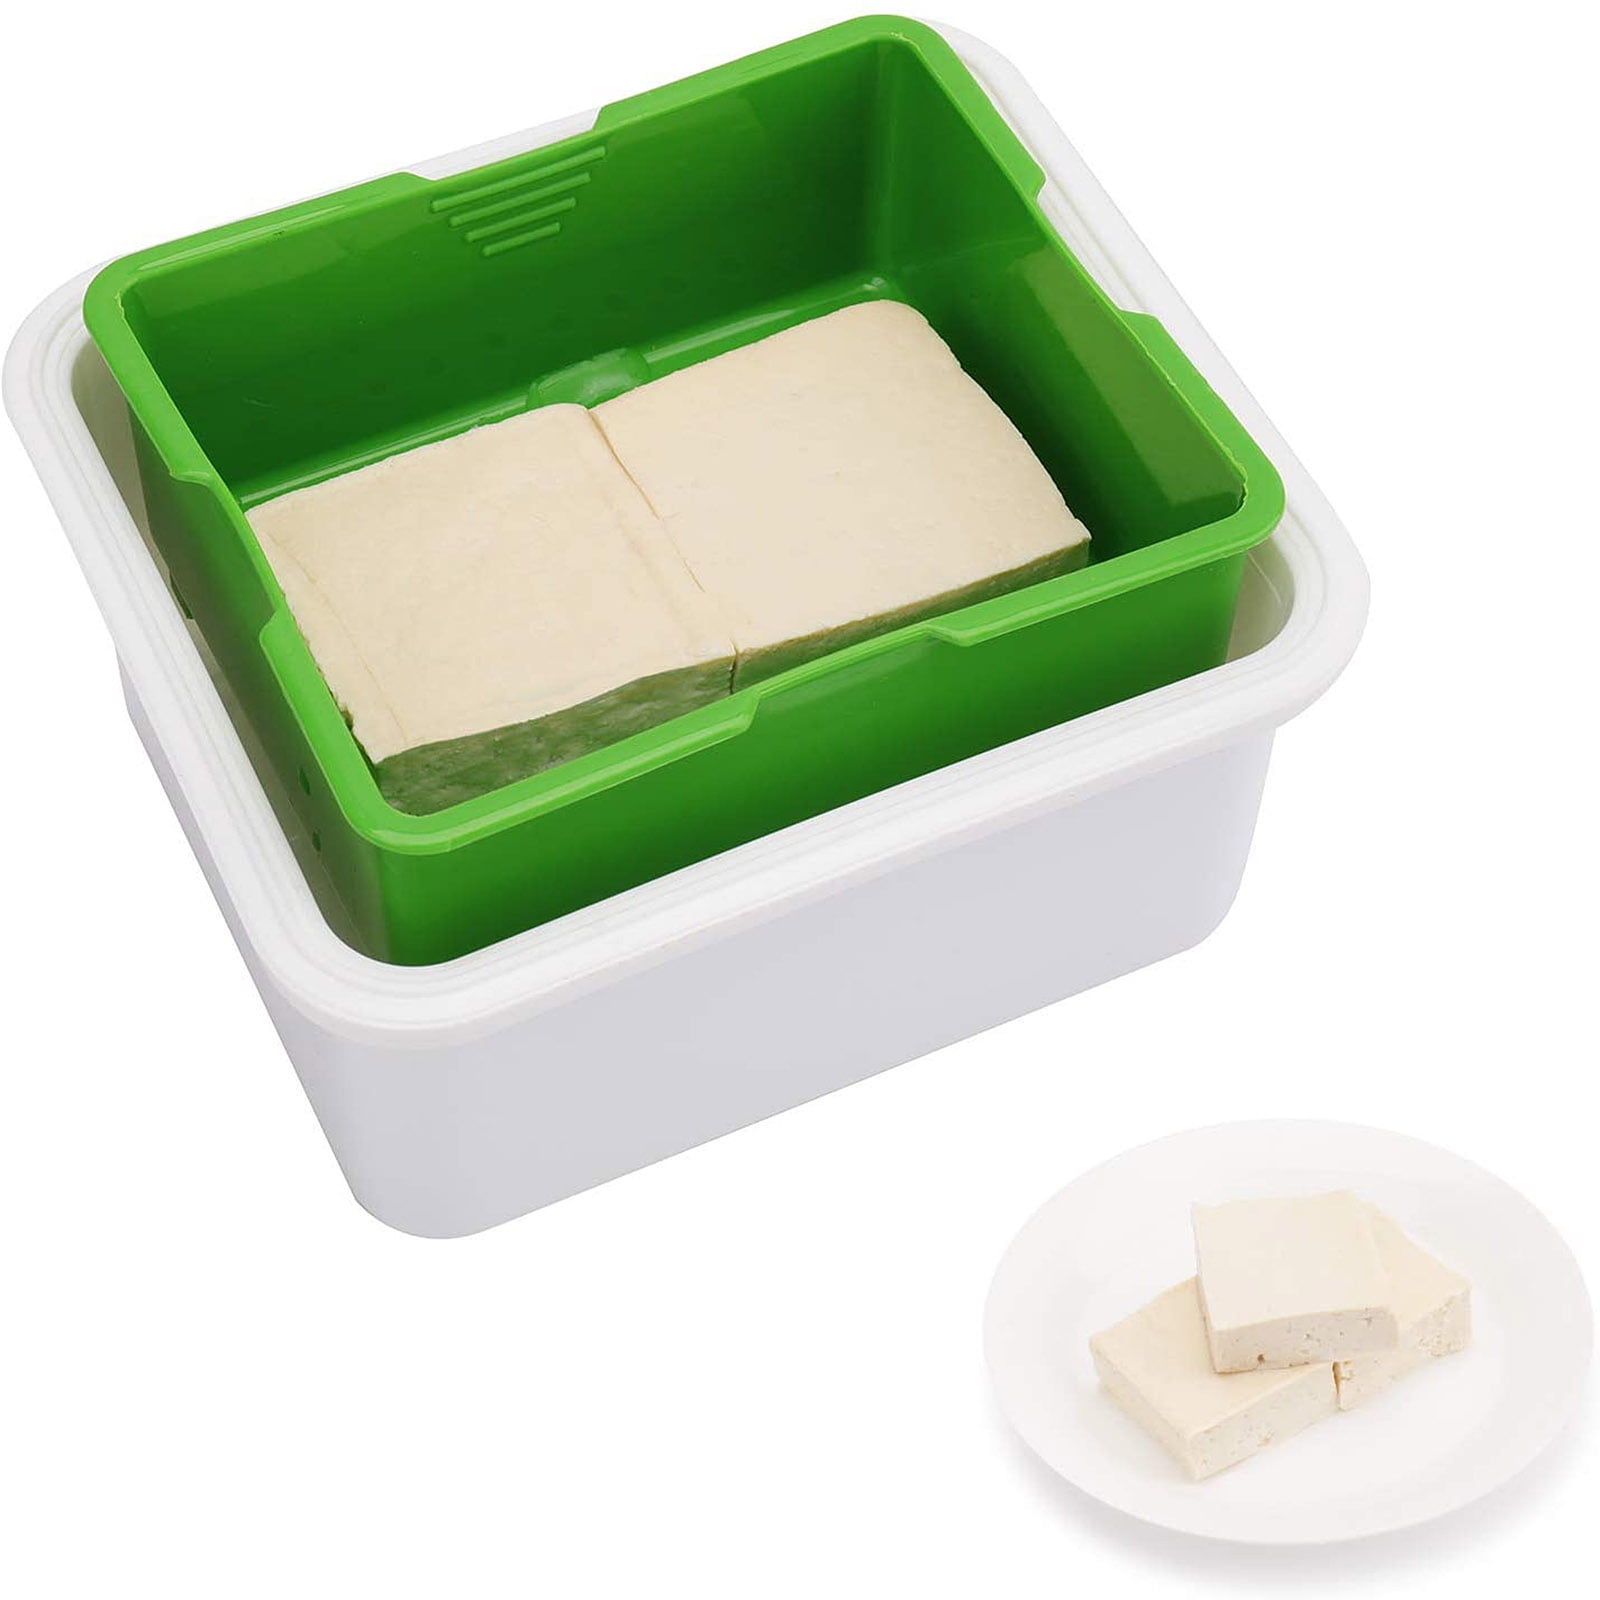 Tofu Press Marinating Dish Removes Moisture From Tofu Automatically N1B3 